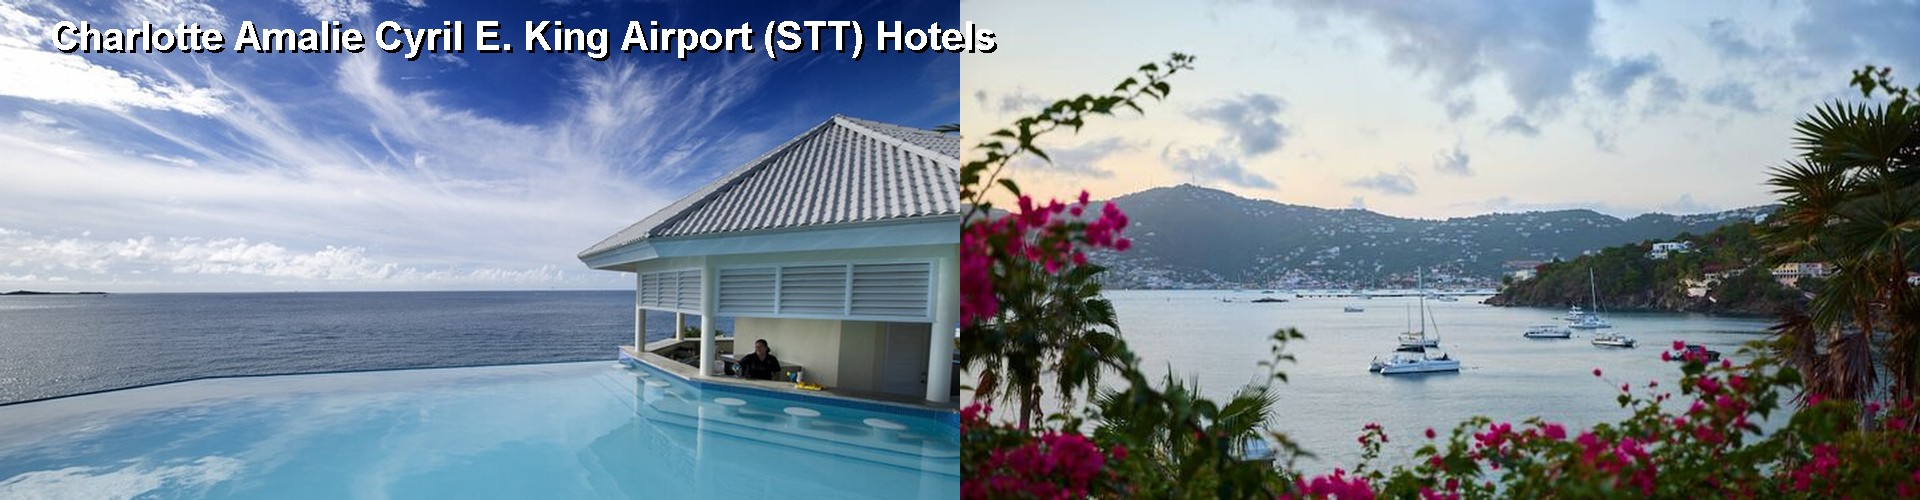 4 Best Hotels near Charlotte Amalie Cyril E. King Airport (STT)